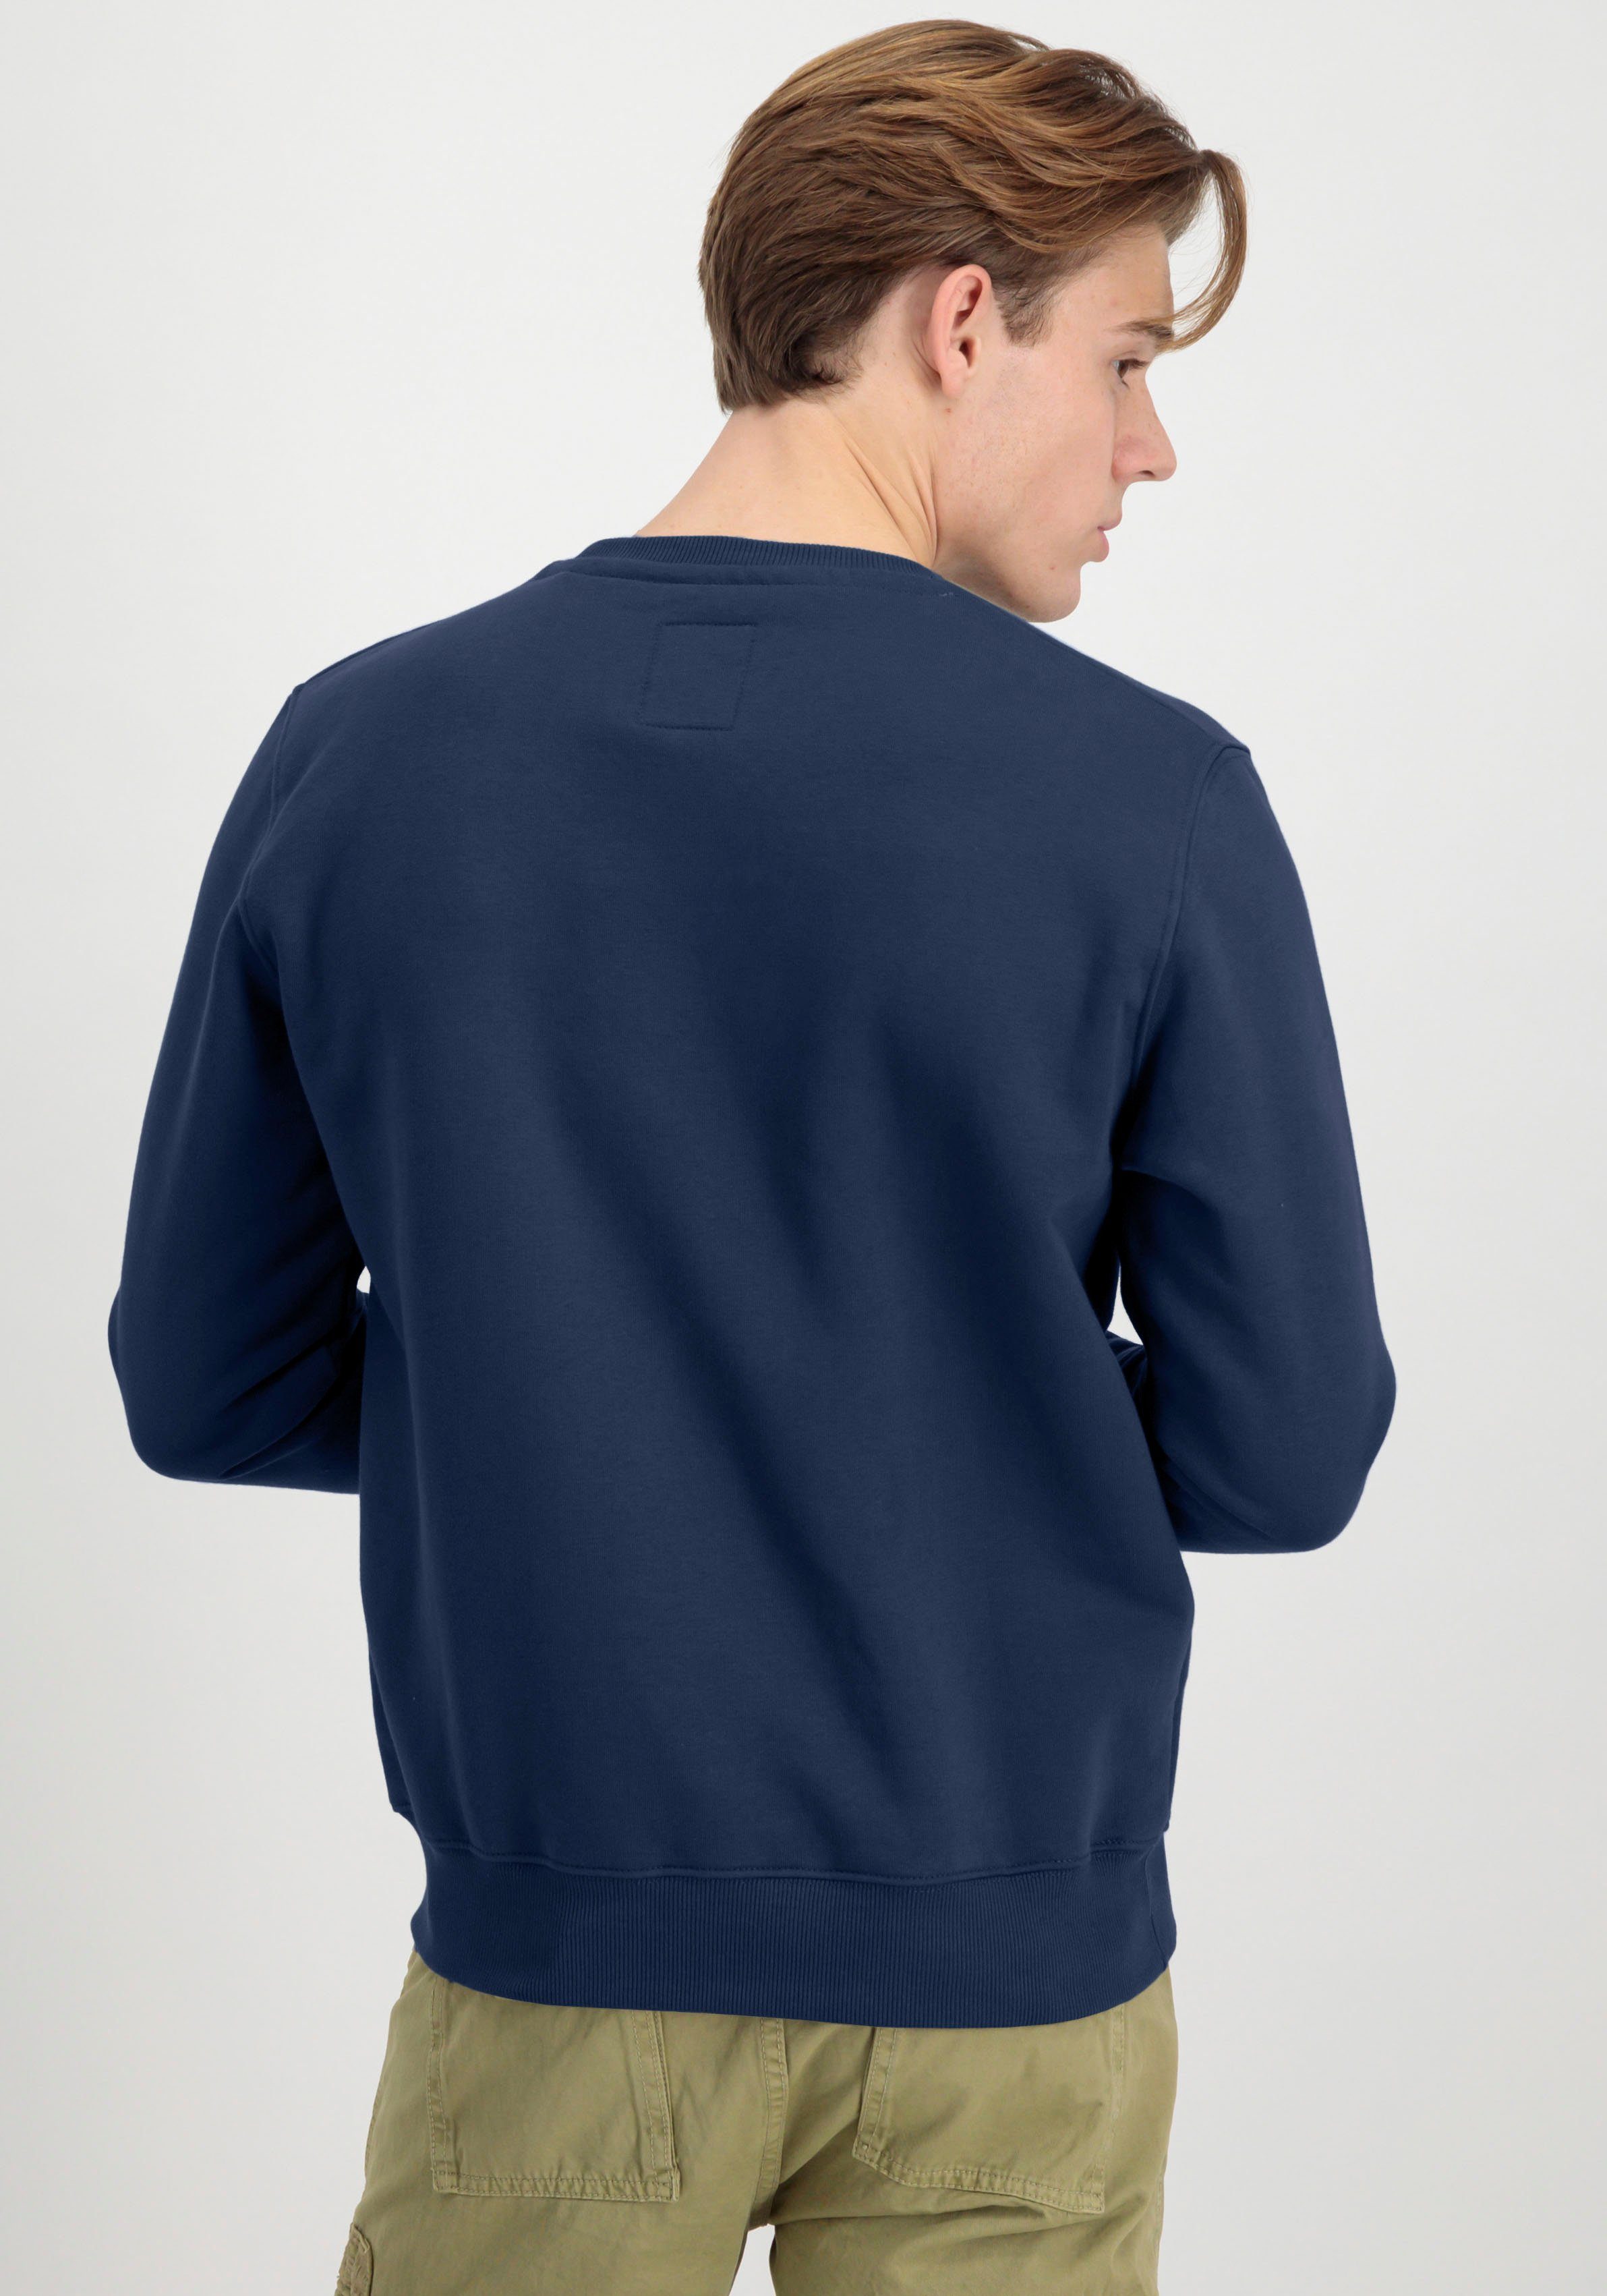 Basic Alpha Sweatshirt Industries navy Sweater new